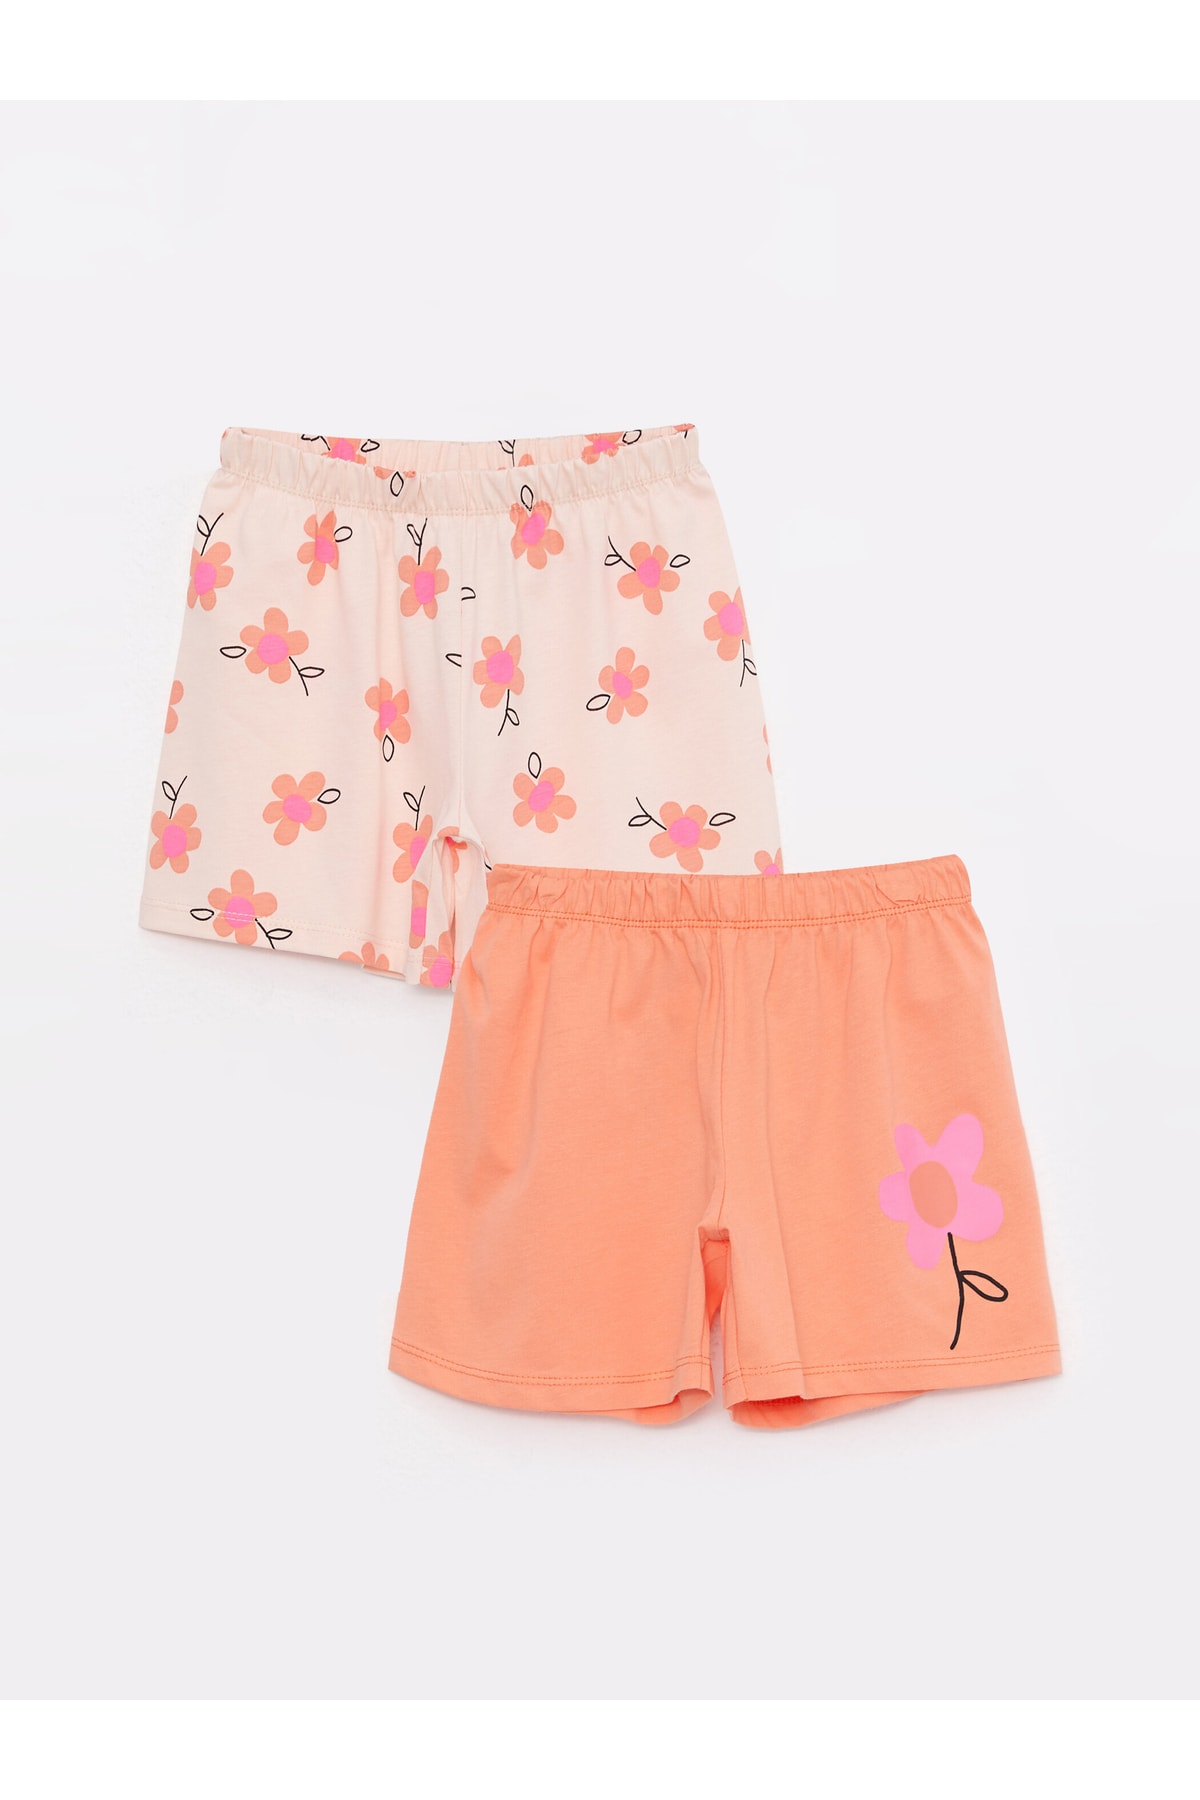 LC Waikiki Girls' Pajamas with Printed Elastic Waist and Cotton Shorts 2-Pack